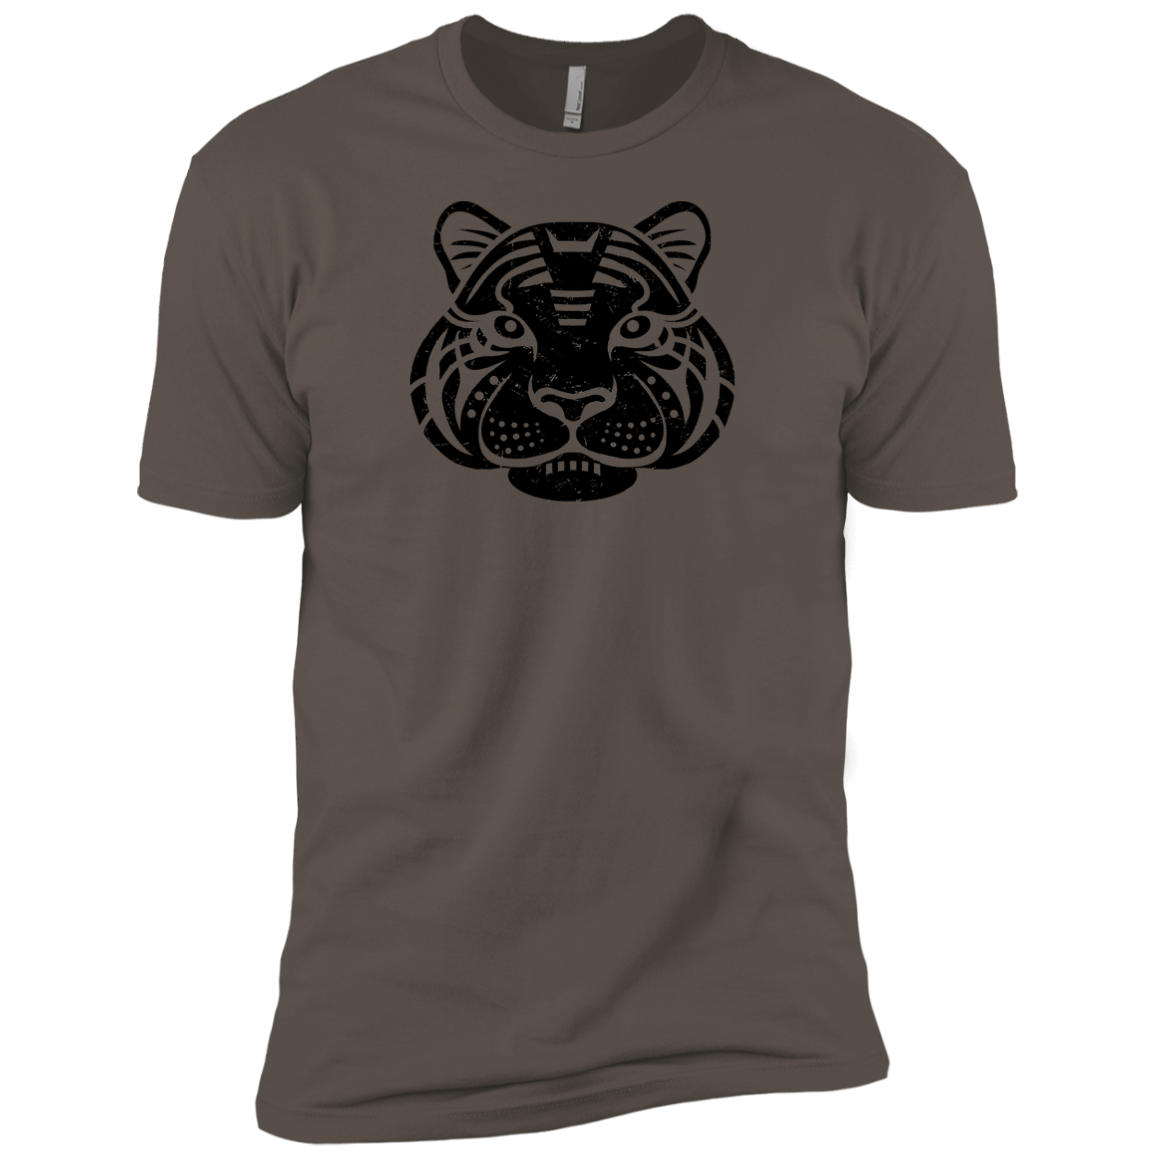 Black Distressed Emblem (Tiger/Siber) - Dark Corps